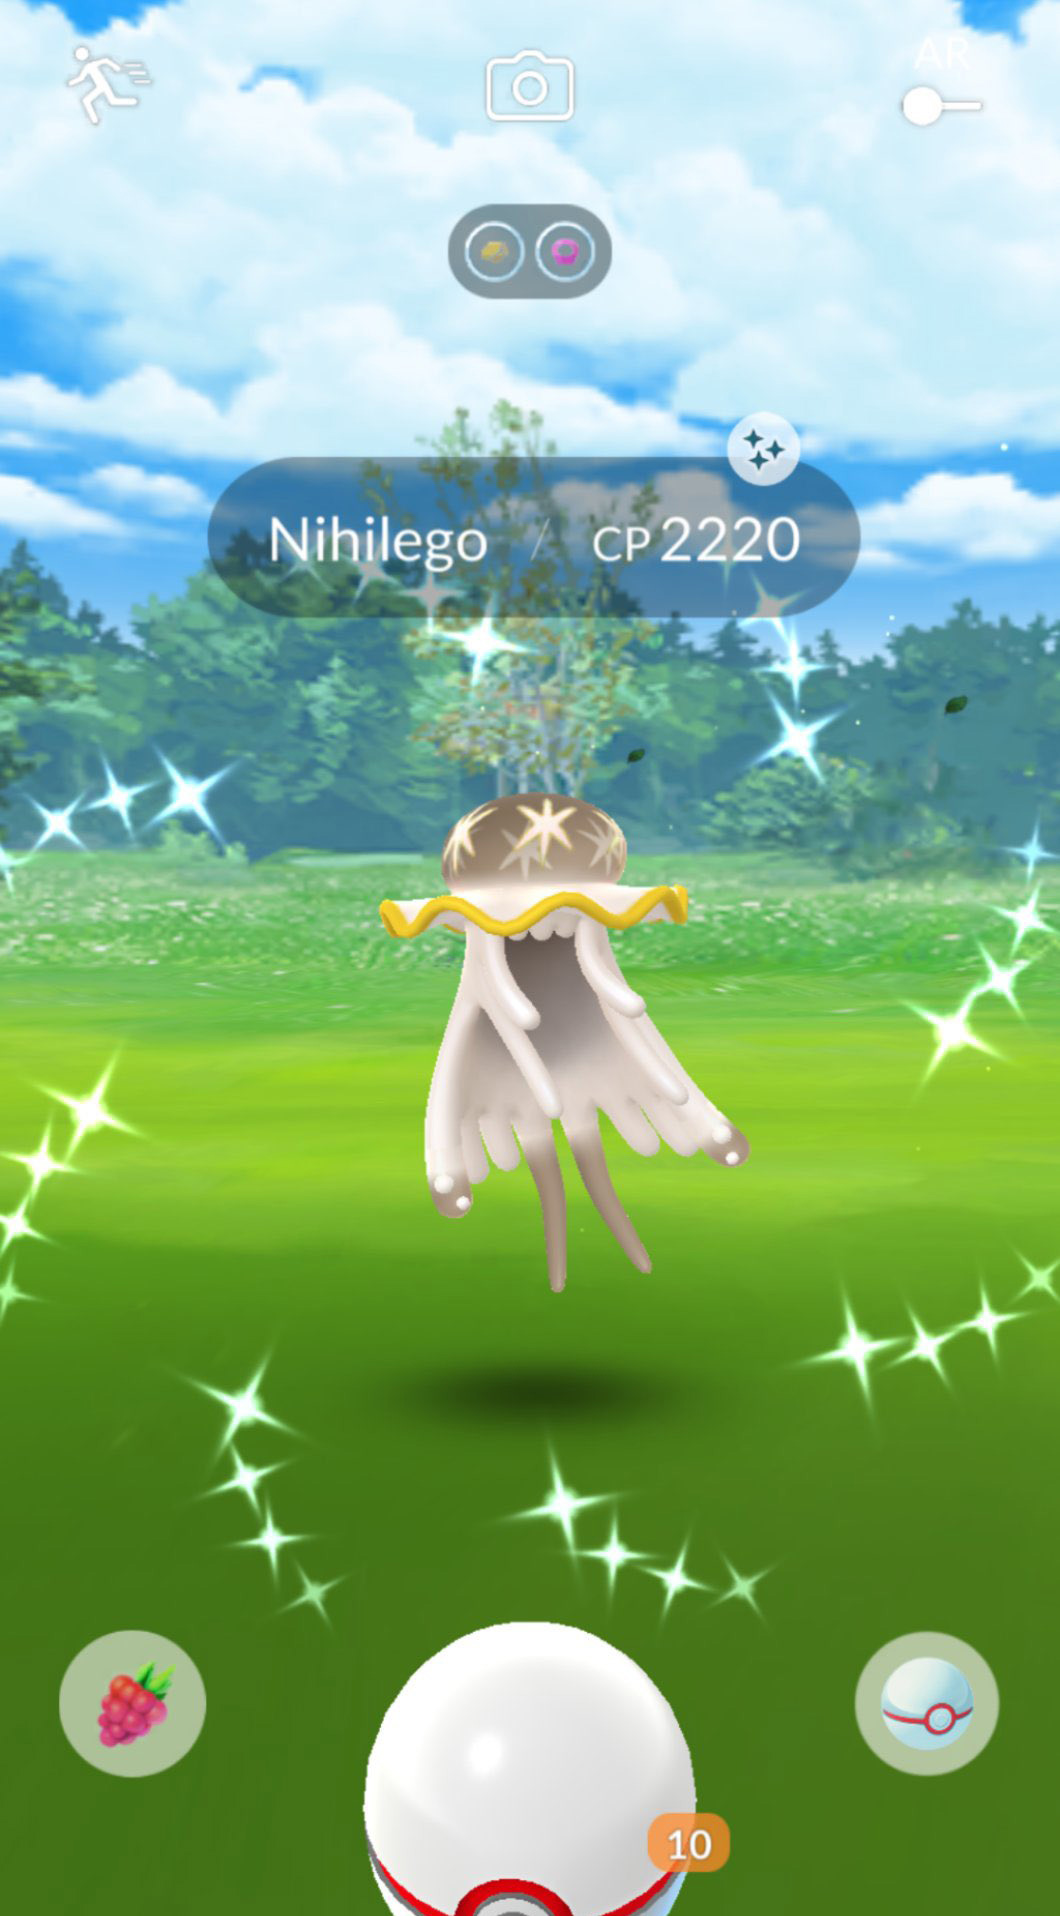 Pokémon GO Hub on X: Shiny Nihilego verification ✓ Check best